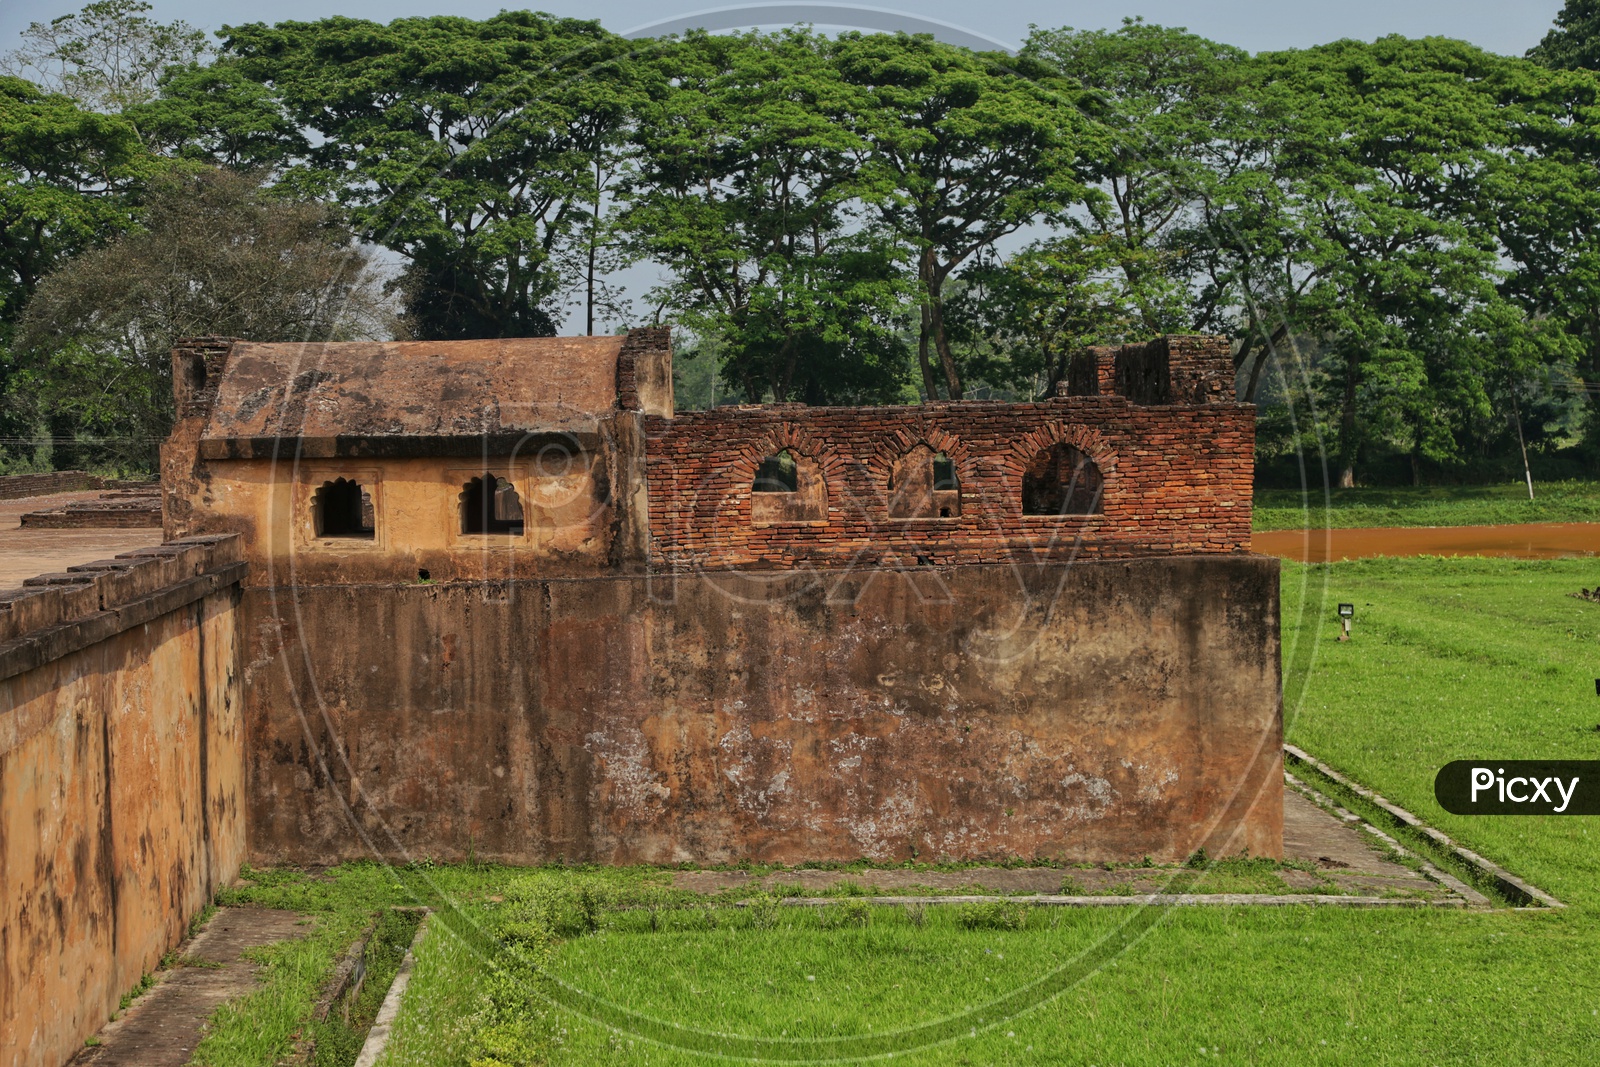 Archeological site in Assam.